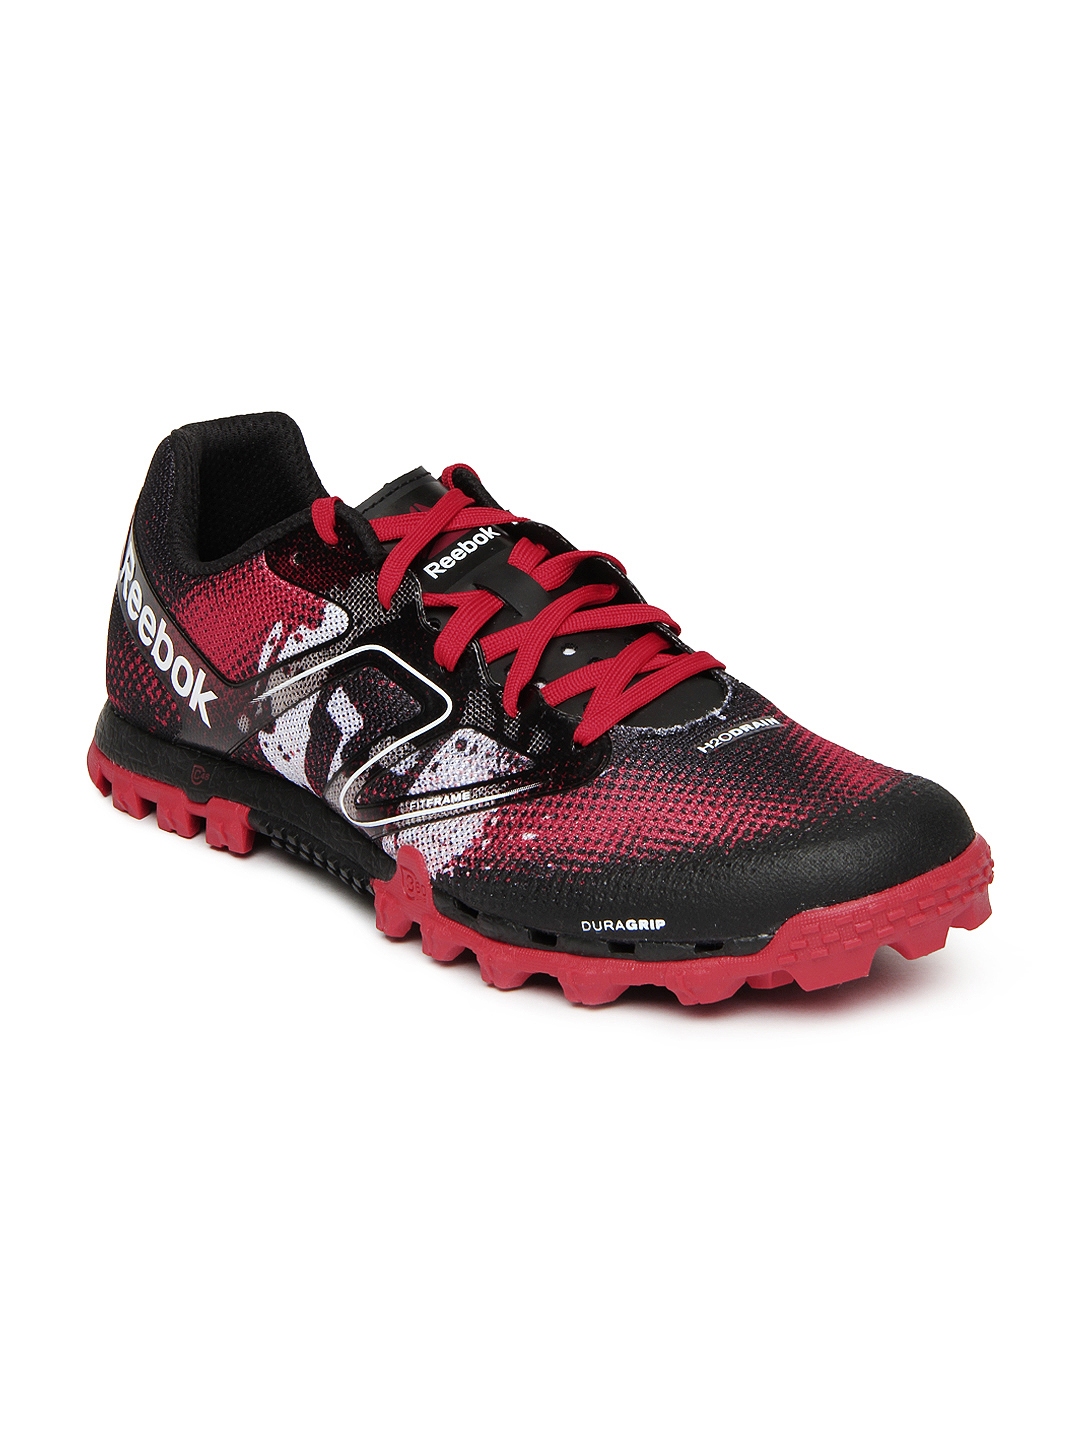 Buy Reebok Men Black All Terrain Super Spartan Running Shoes - Sports for Men 370136 | Myntra